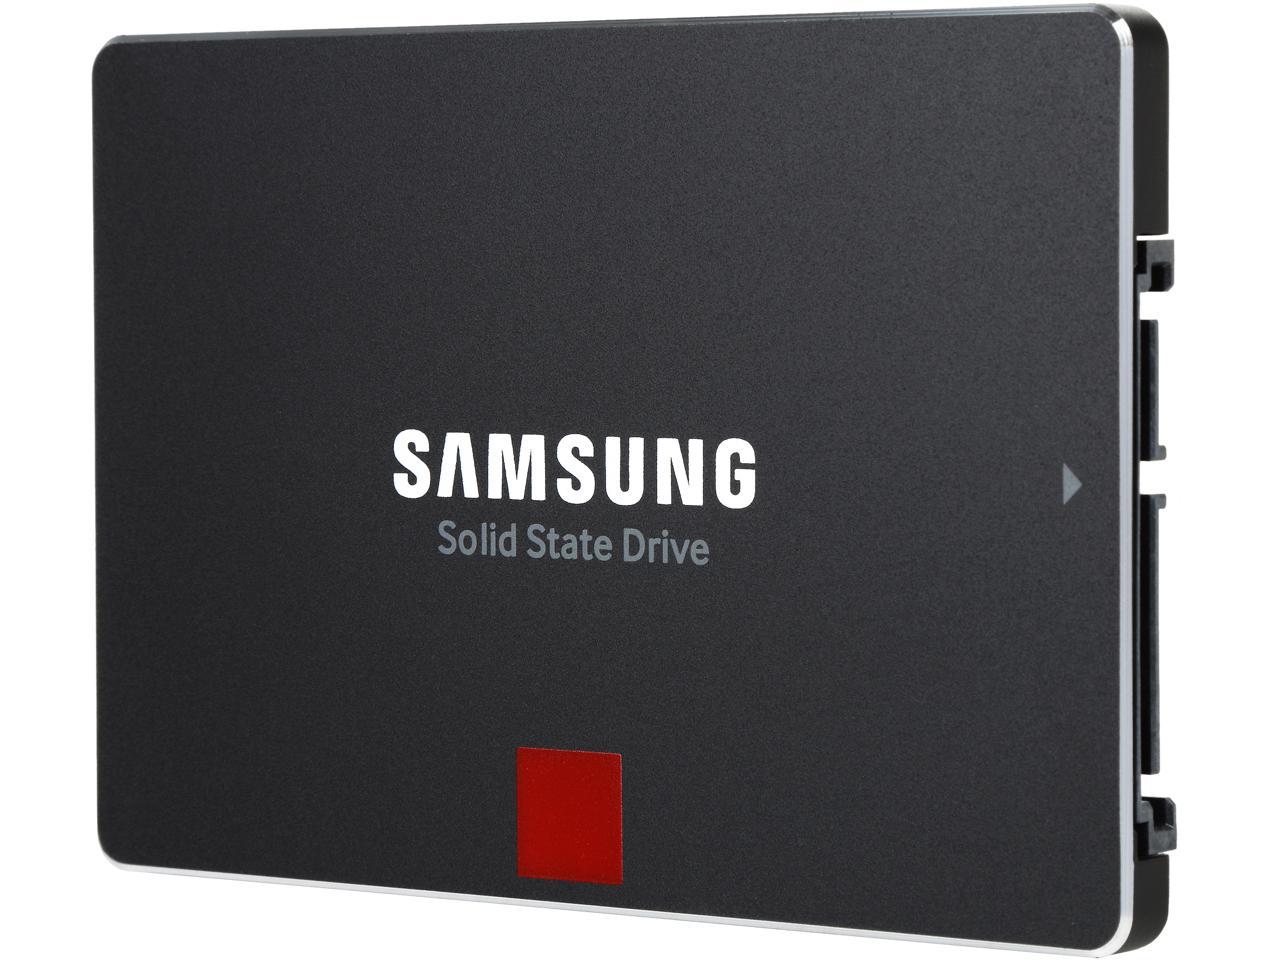 Samsung pro 2tb купить. Samsung 850 Pro 2tb. SSD Samsung 850 Pro 256gb. Samsung SSD 850/860, 256/512/1024 GB. Samsung 850 Pro SATA MZ-7ke256bw.